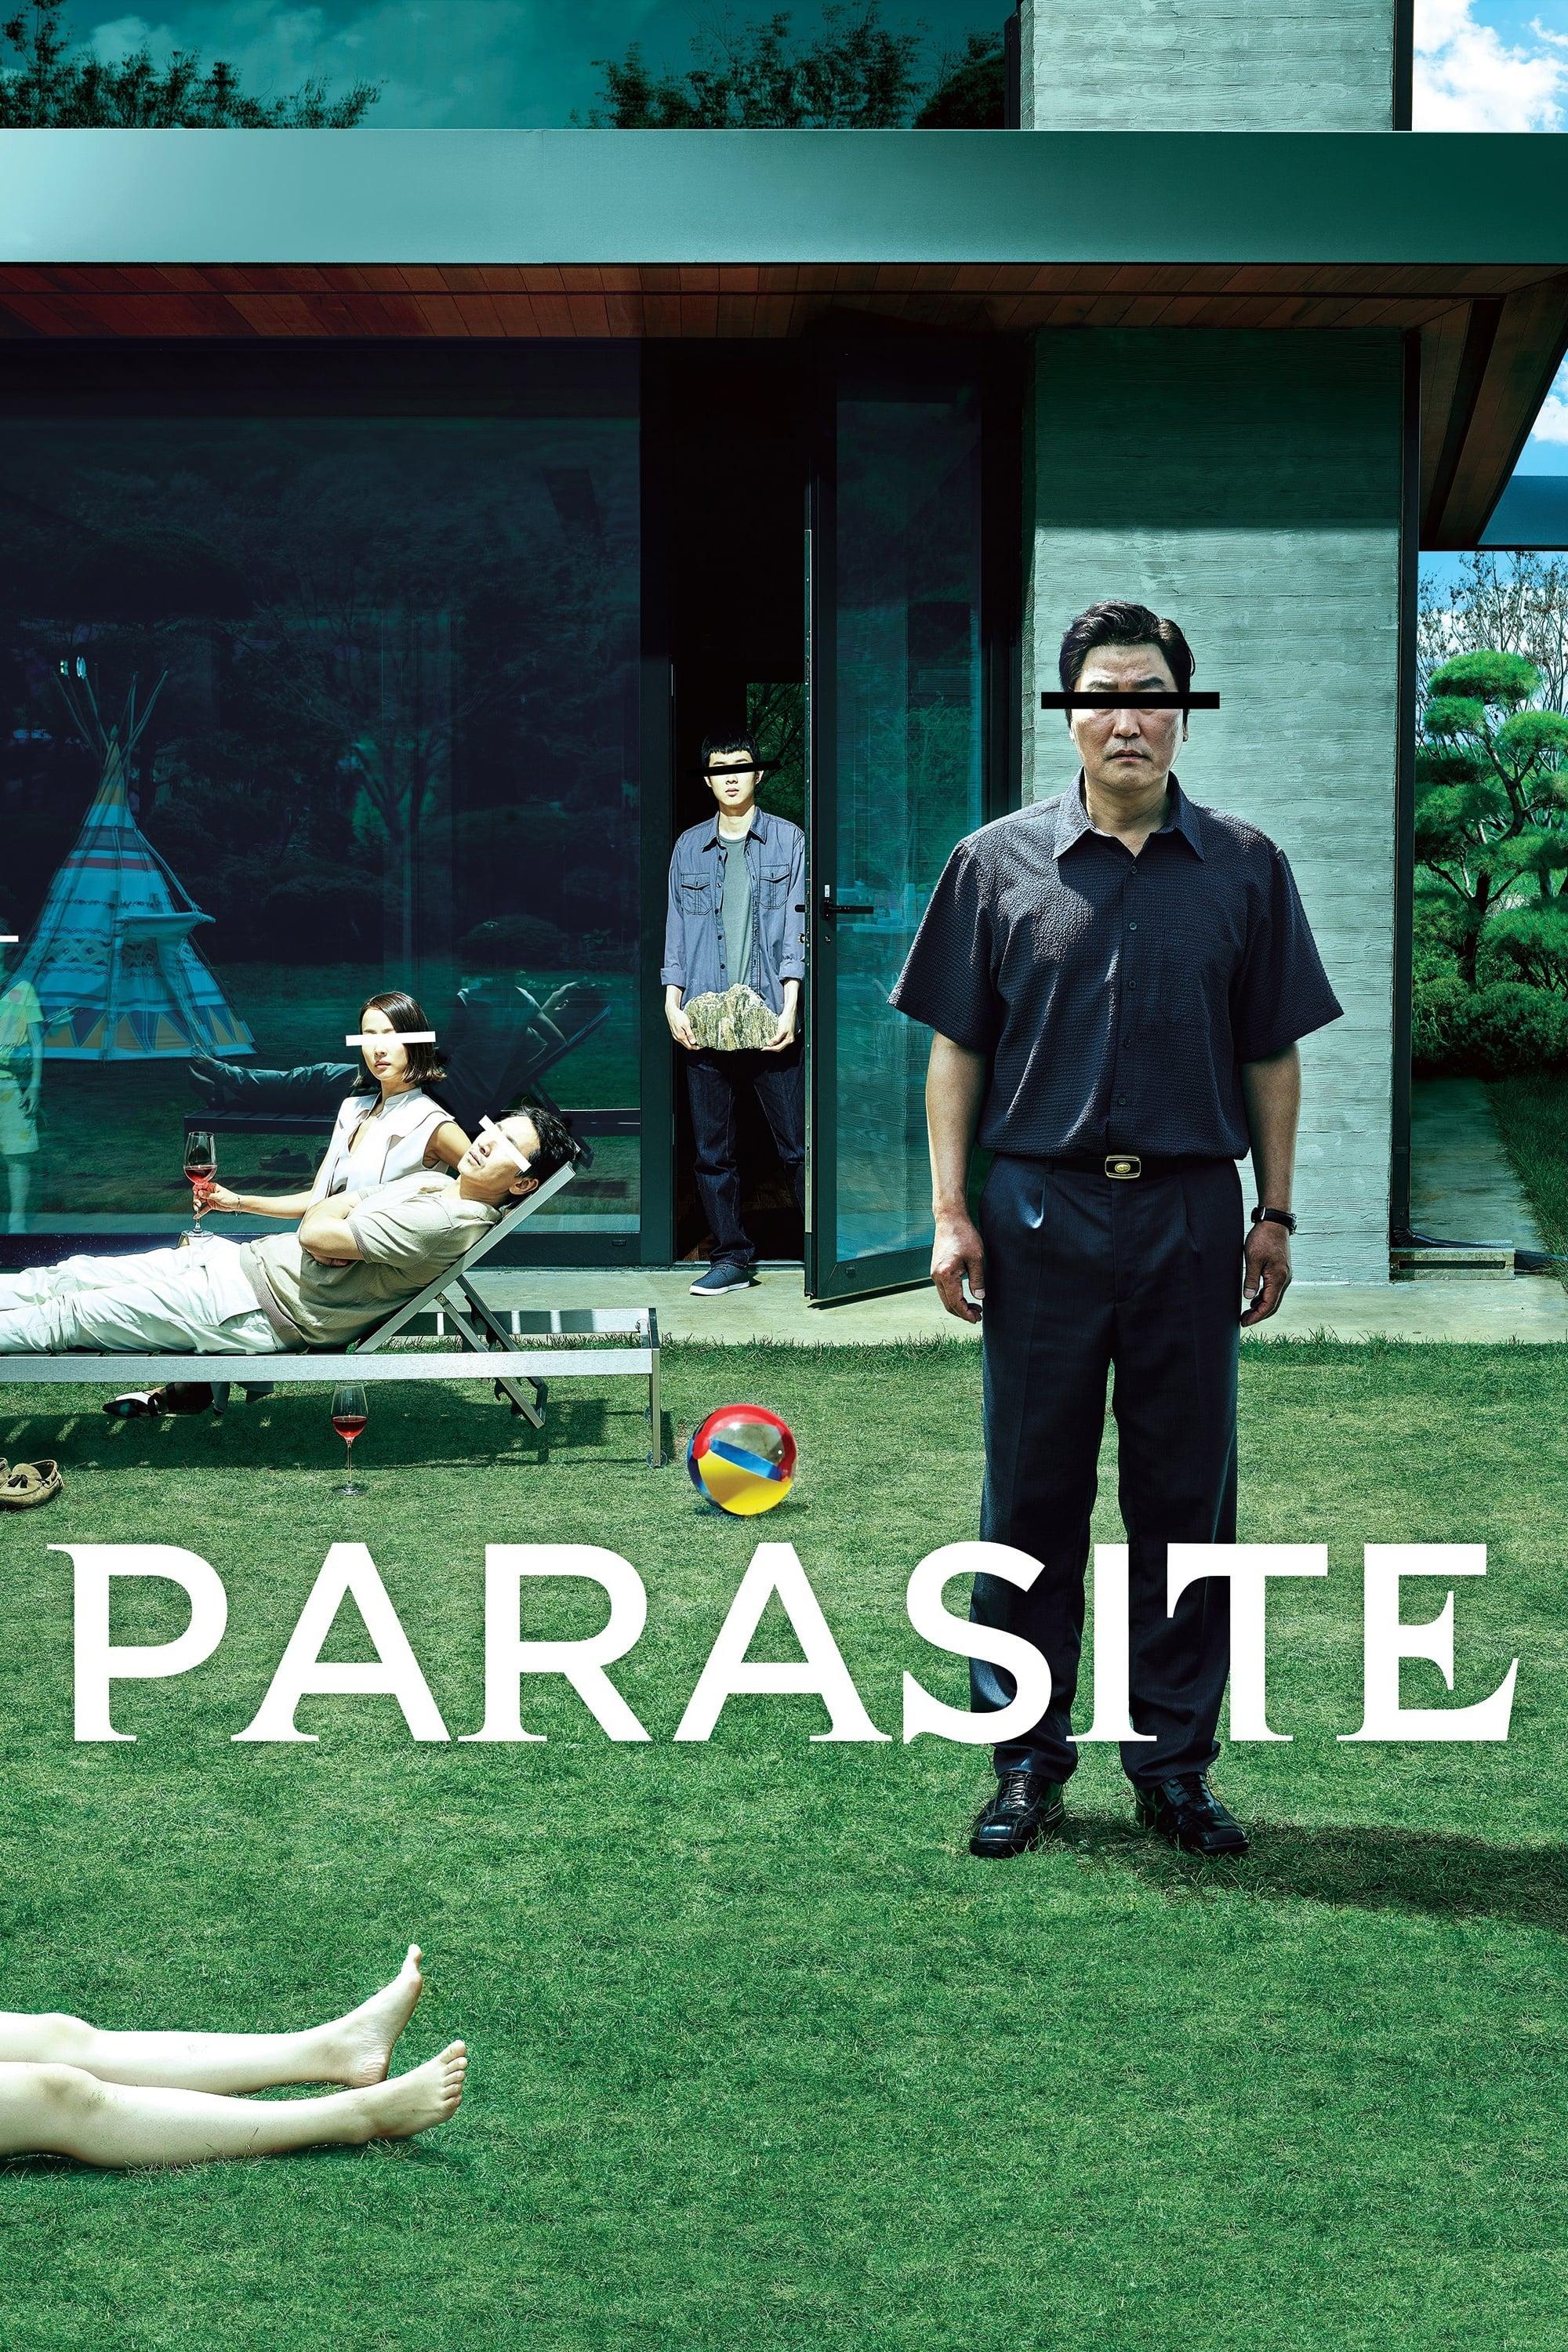 Movie poster of "Parasite"